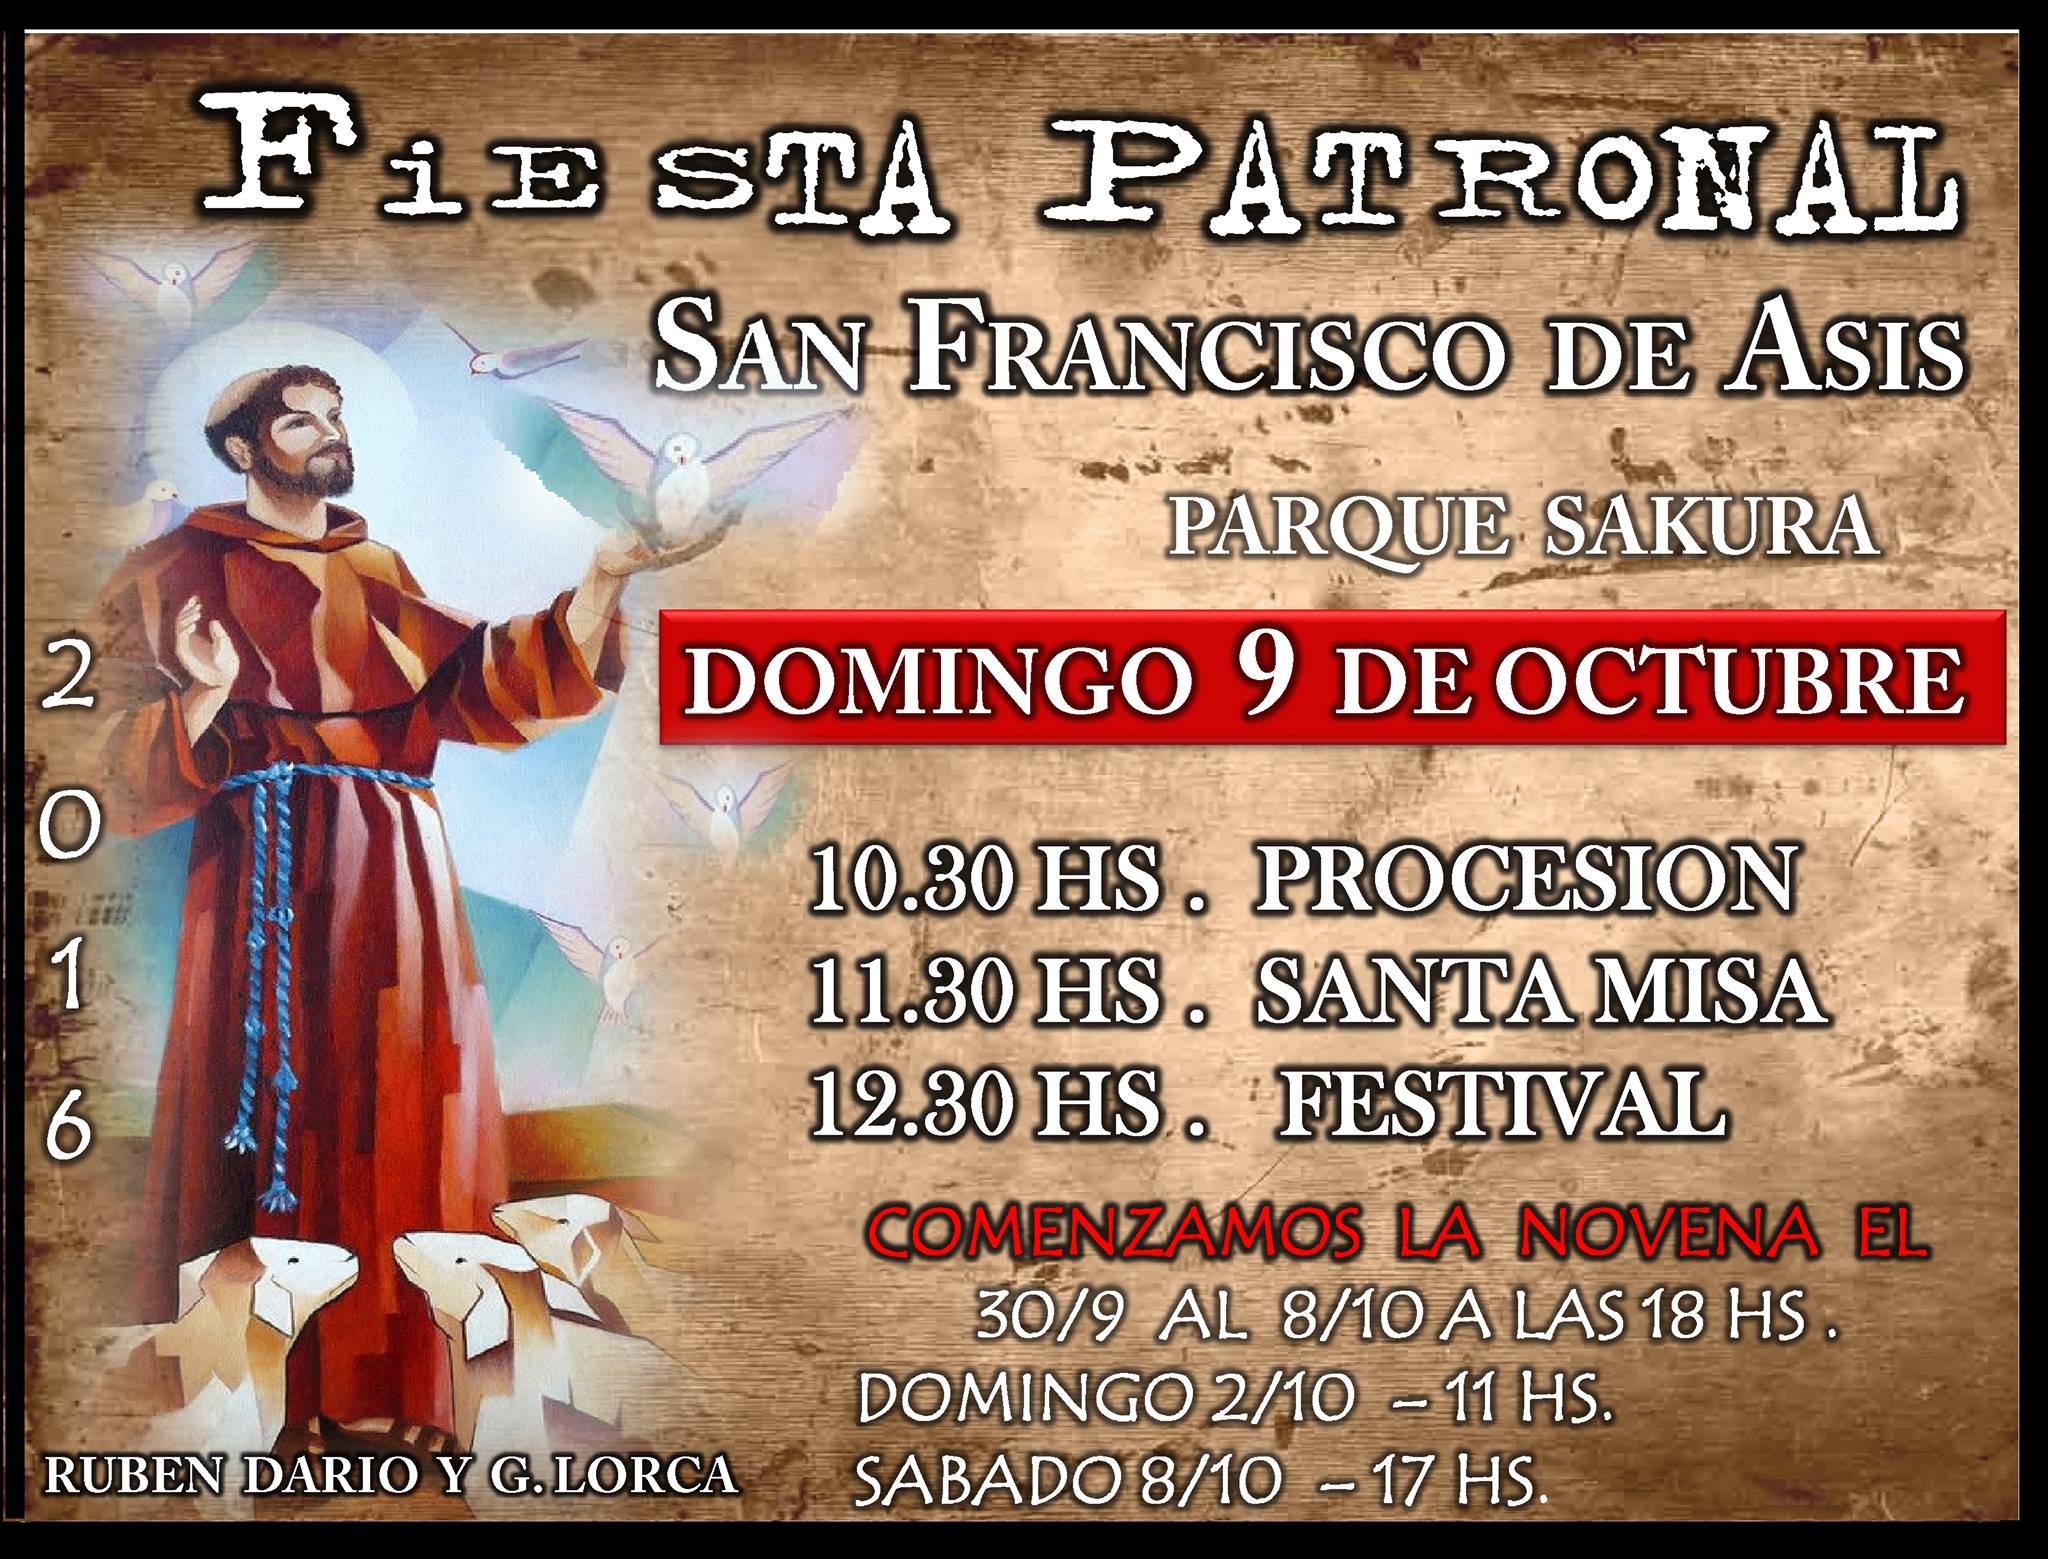 Domingo 9 de octubre: Fiesta Patronal San Francisco de Asis. Parque Sakura